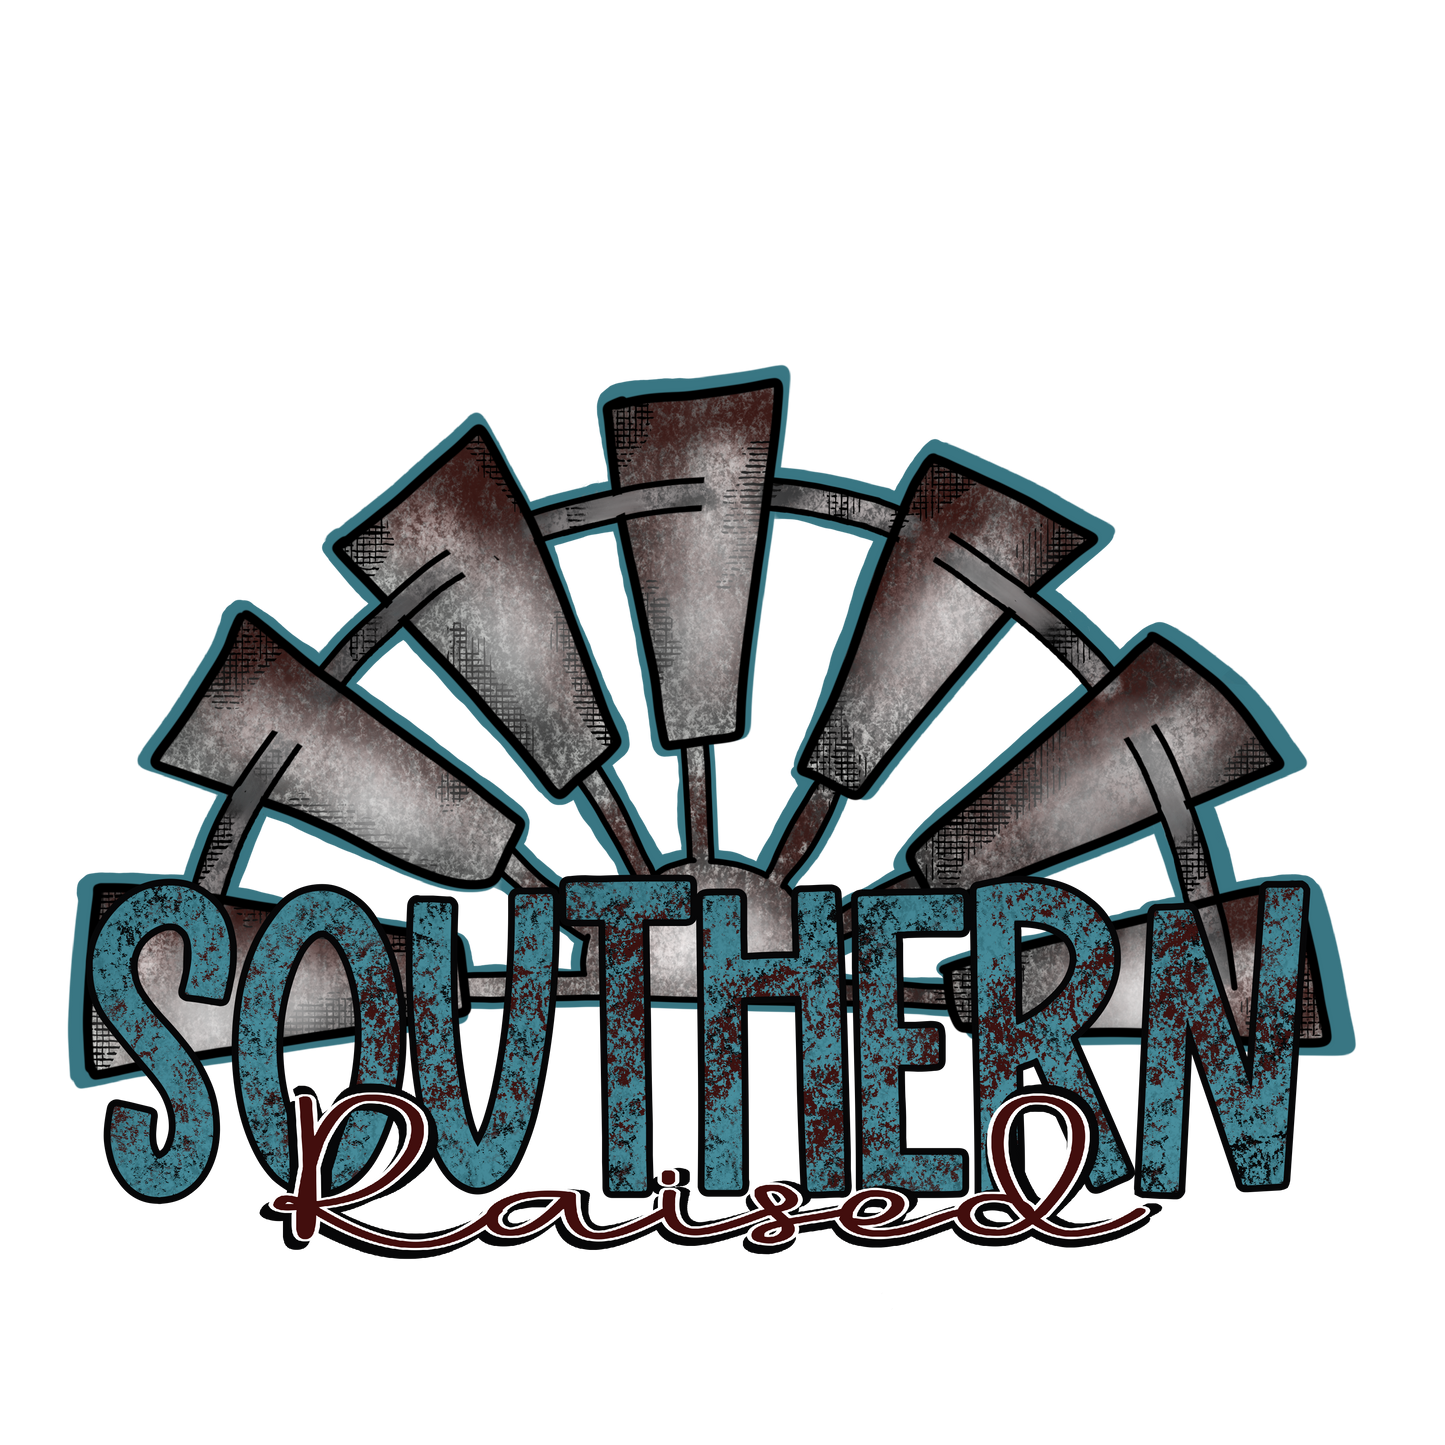 Southern Raised Design Transfer